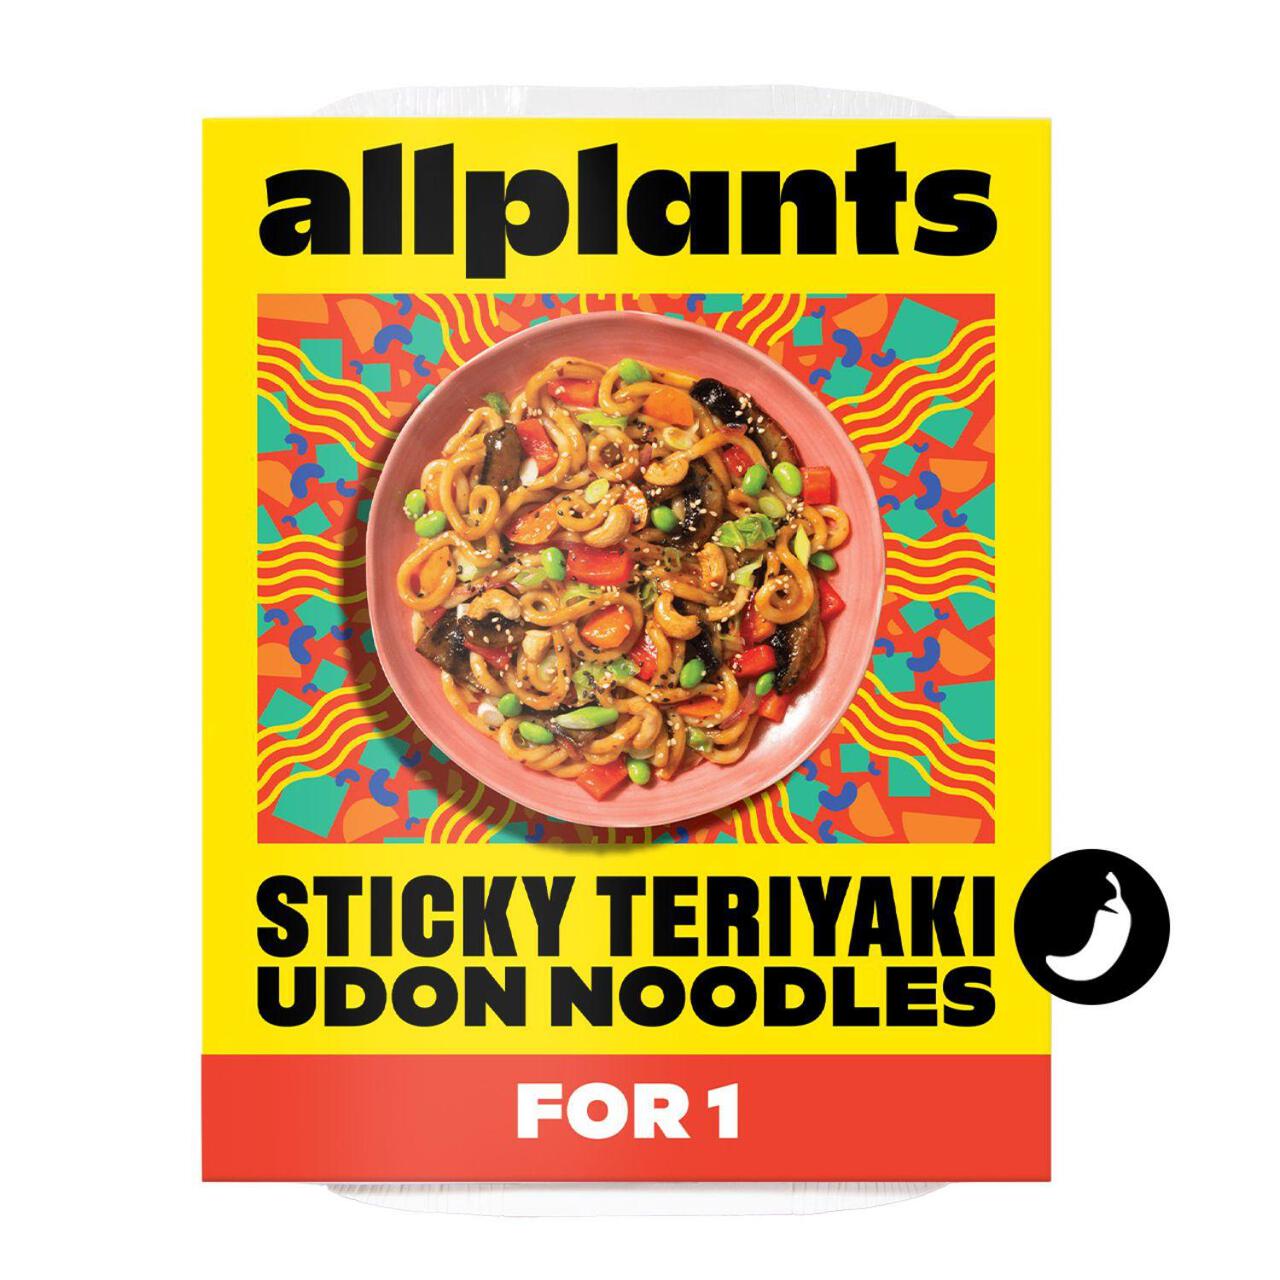 allplants Sticky Teriyaki Udon Noodles for 1 365g